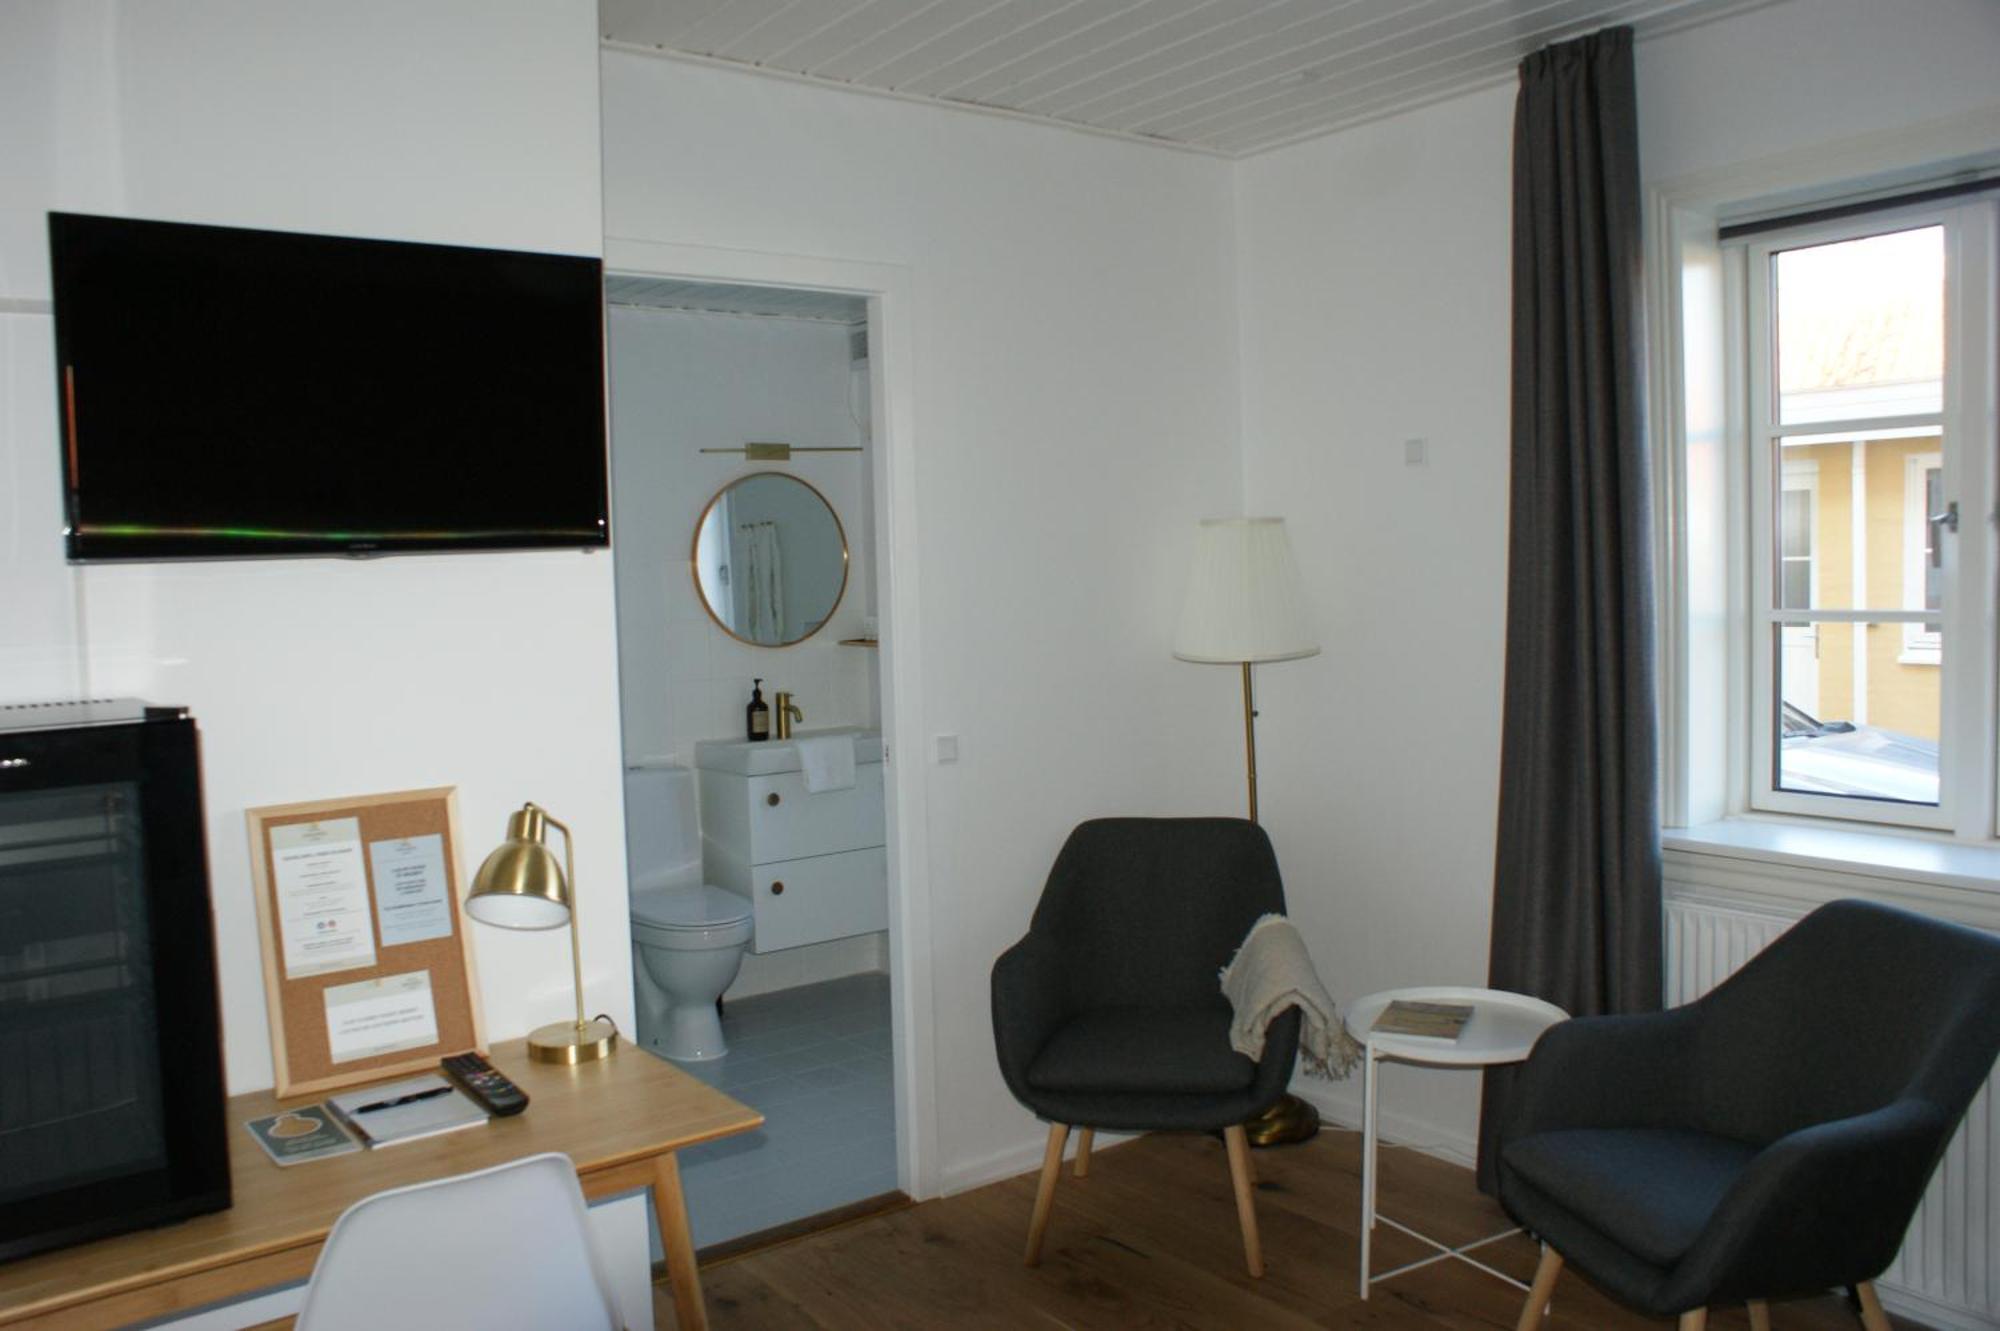 Hotel Strandly Skagen Exterior photo